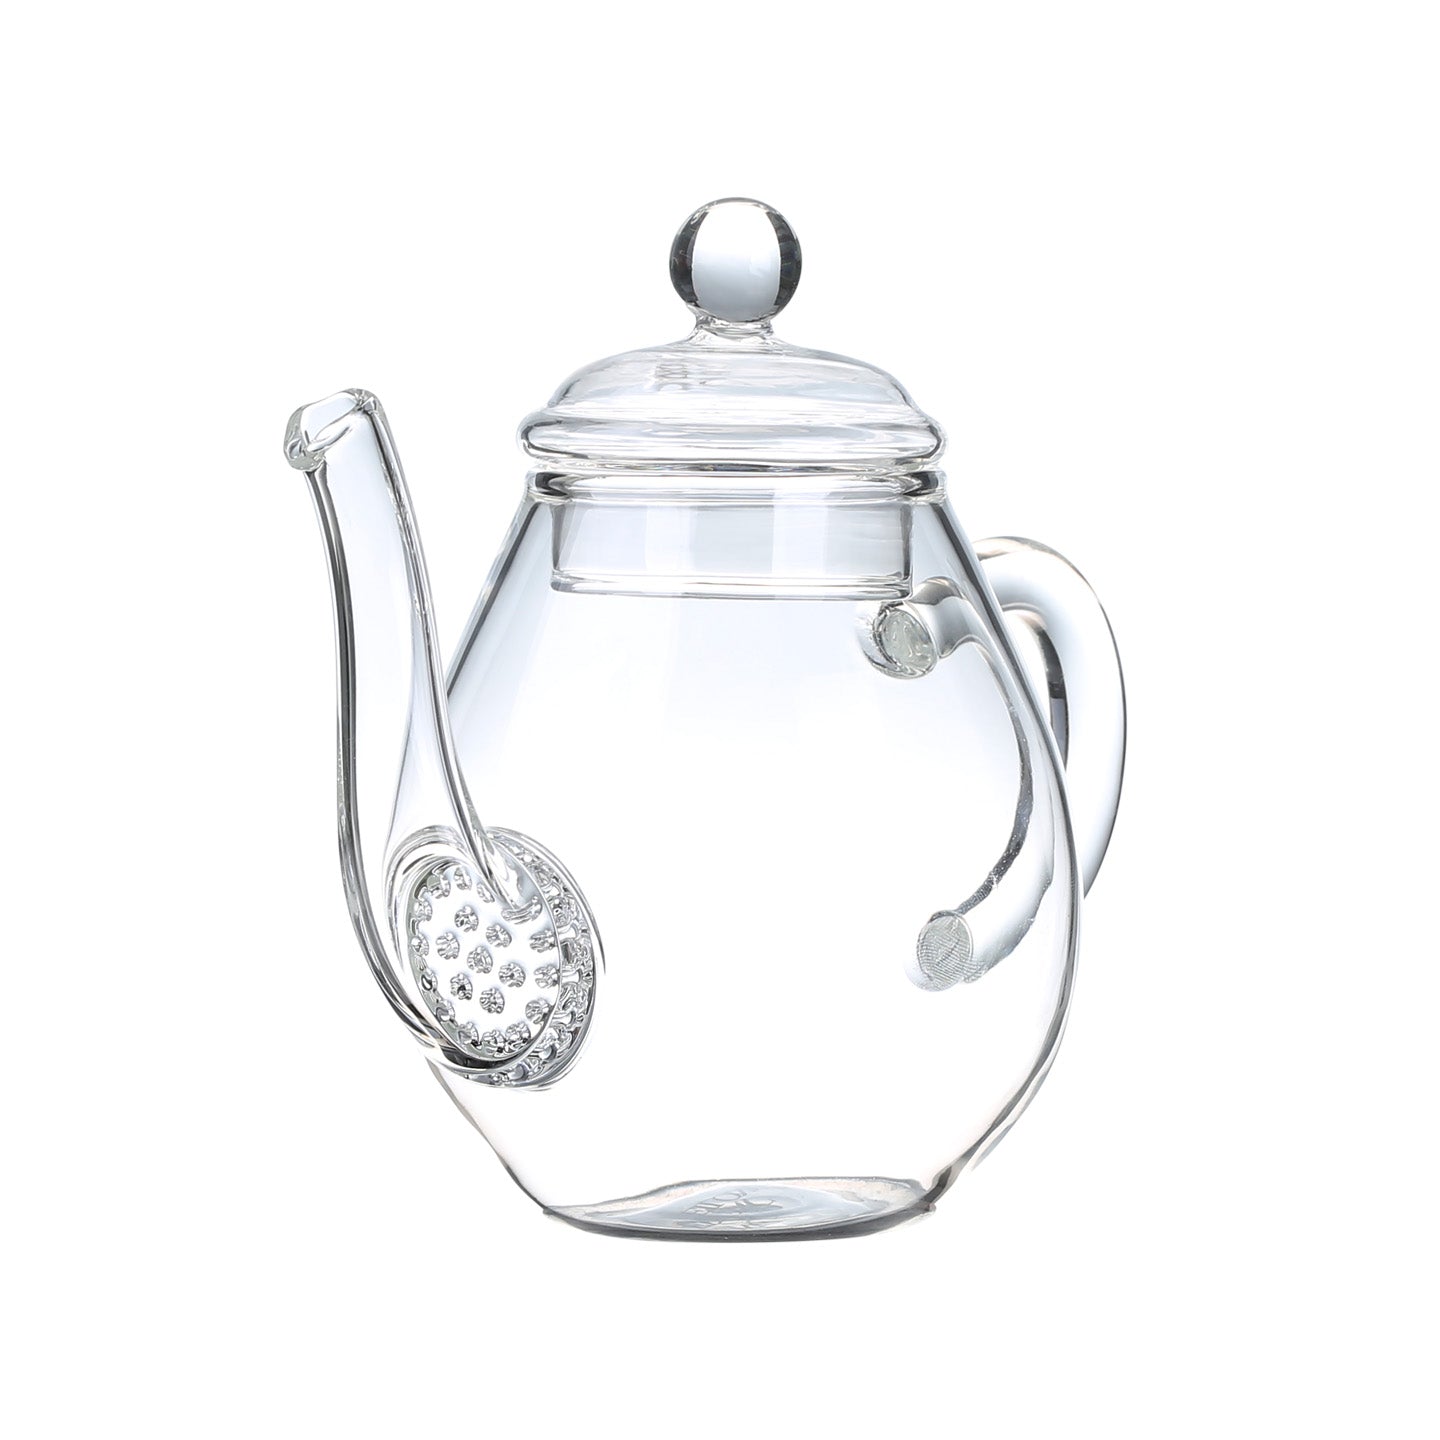 Glass Teapot - 54oz/1600ml Tea Pots with Scale Line, Glass Teapot